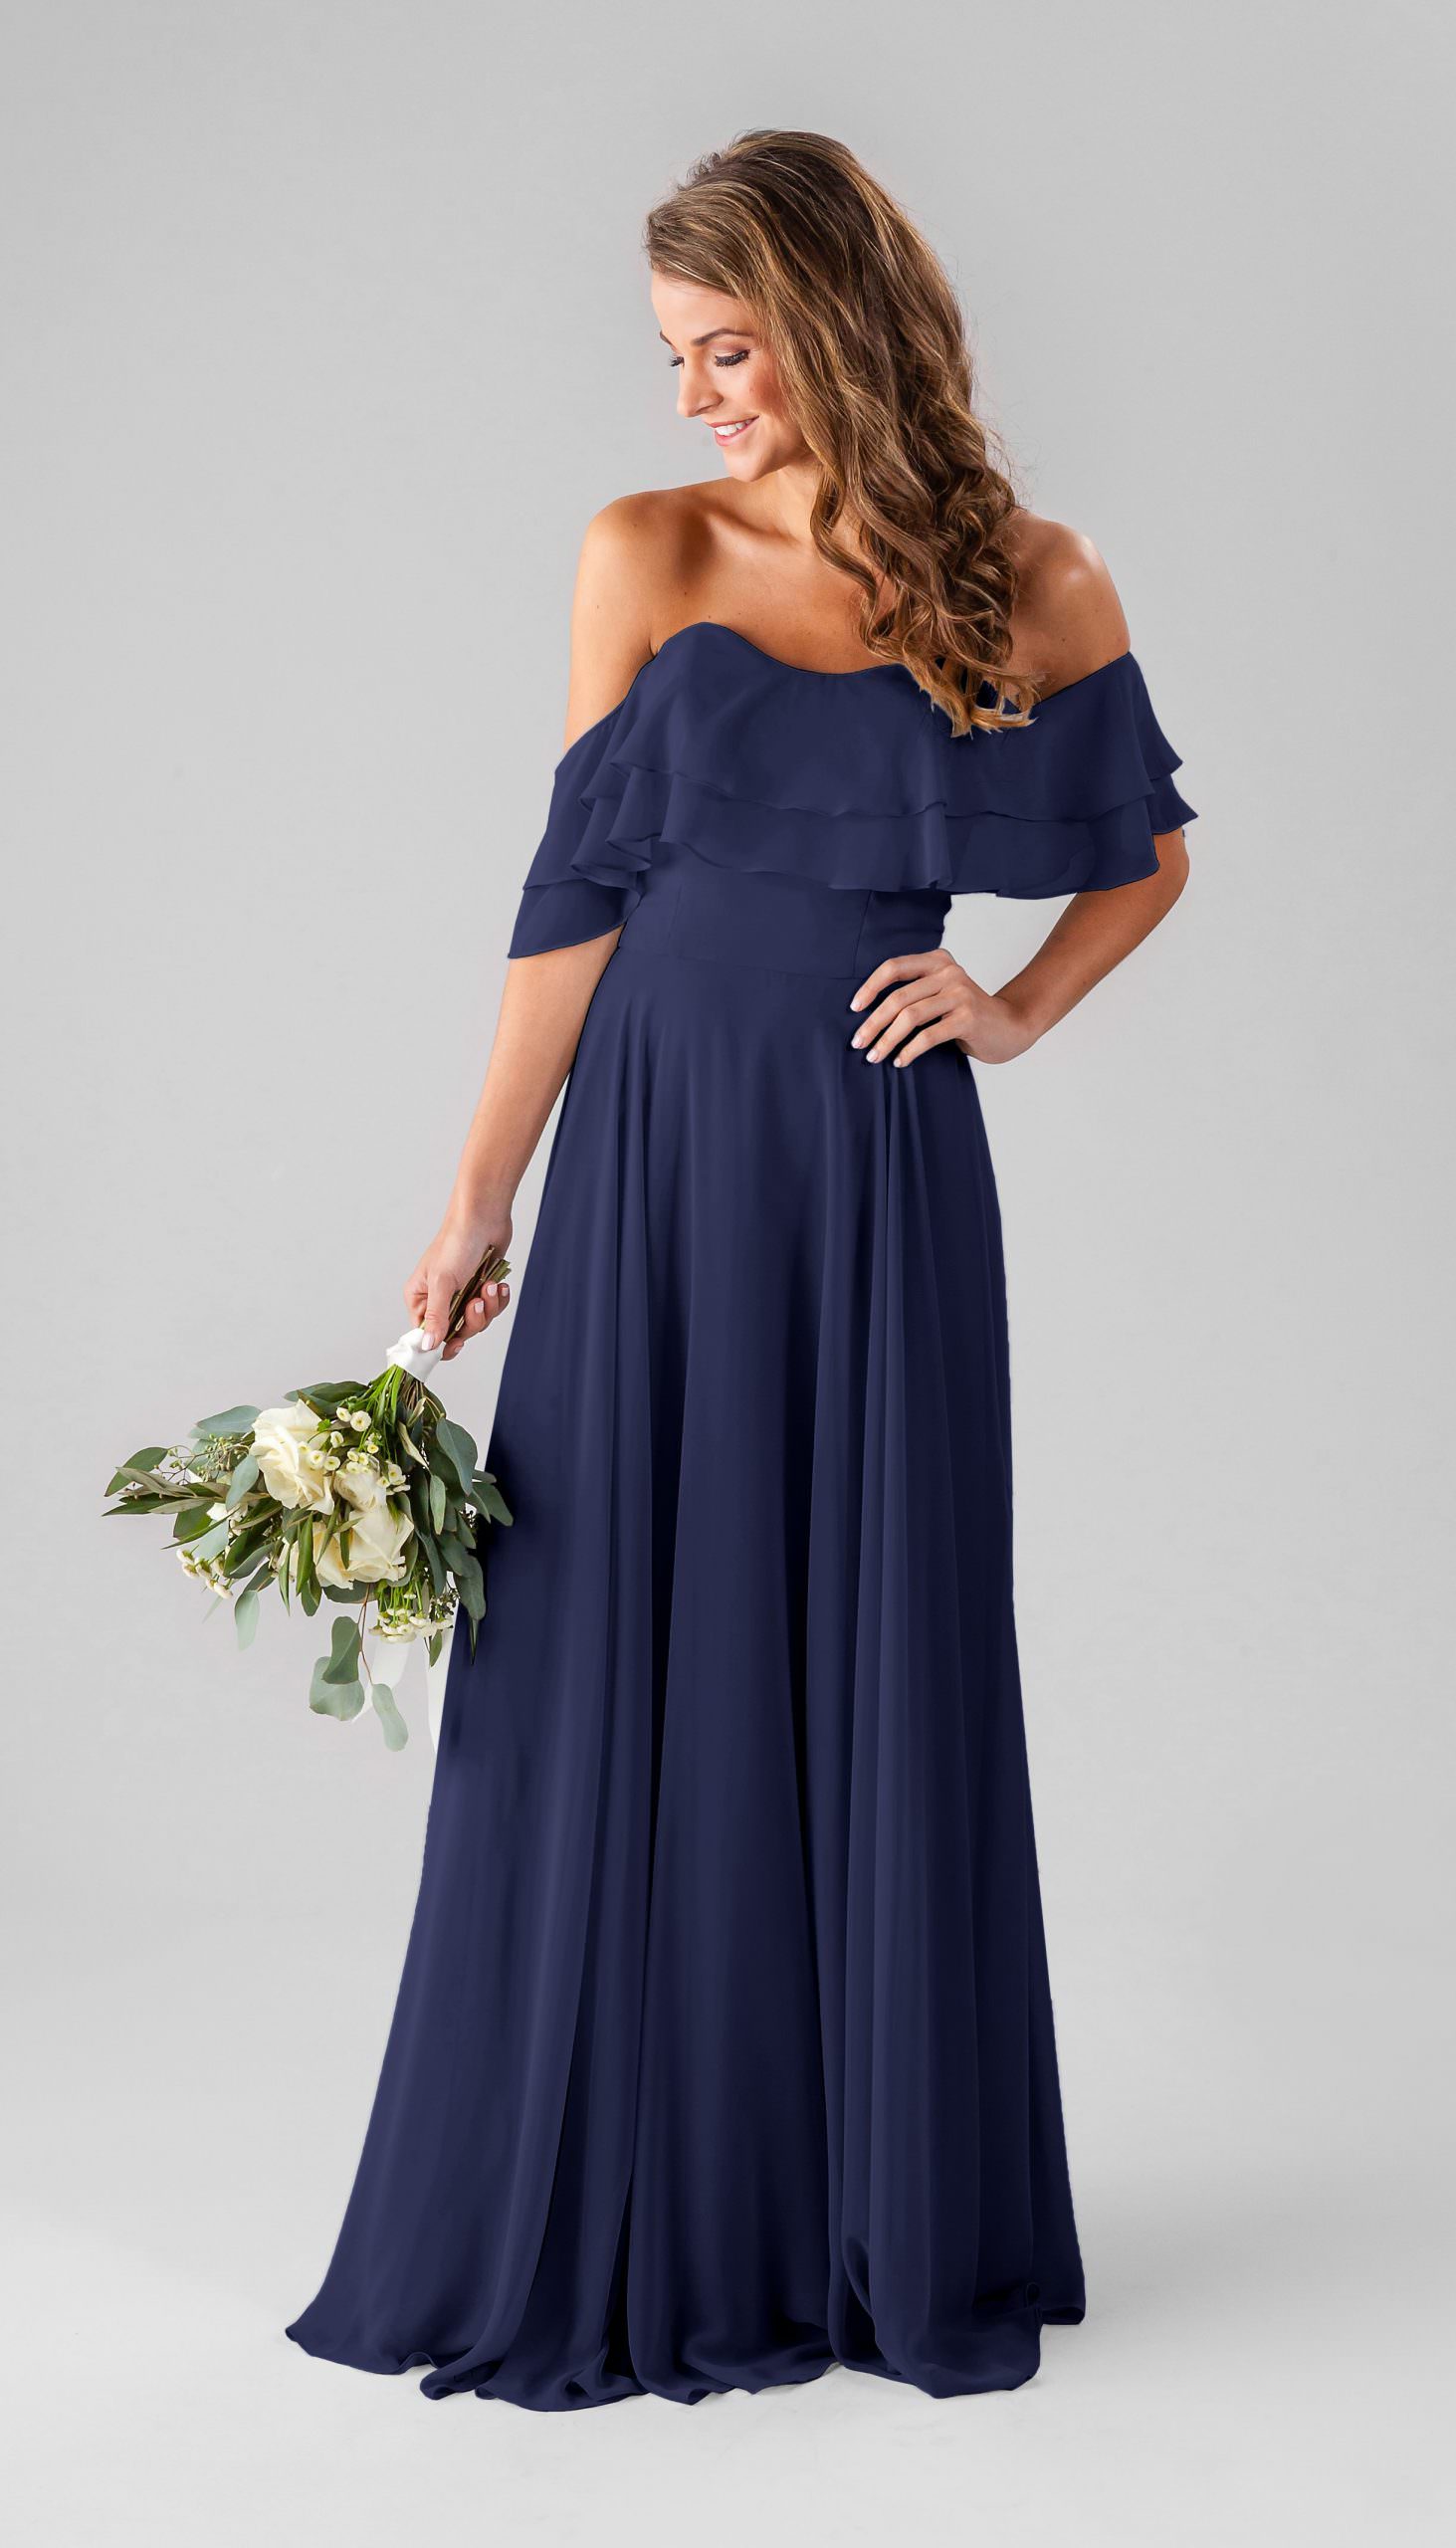 ruffled-off-the-shoulder-bridesmaid-dress-kennedy-blue